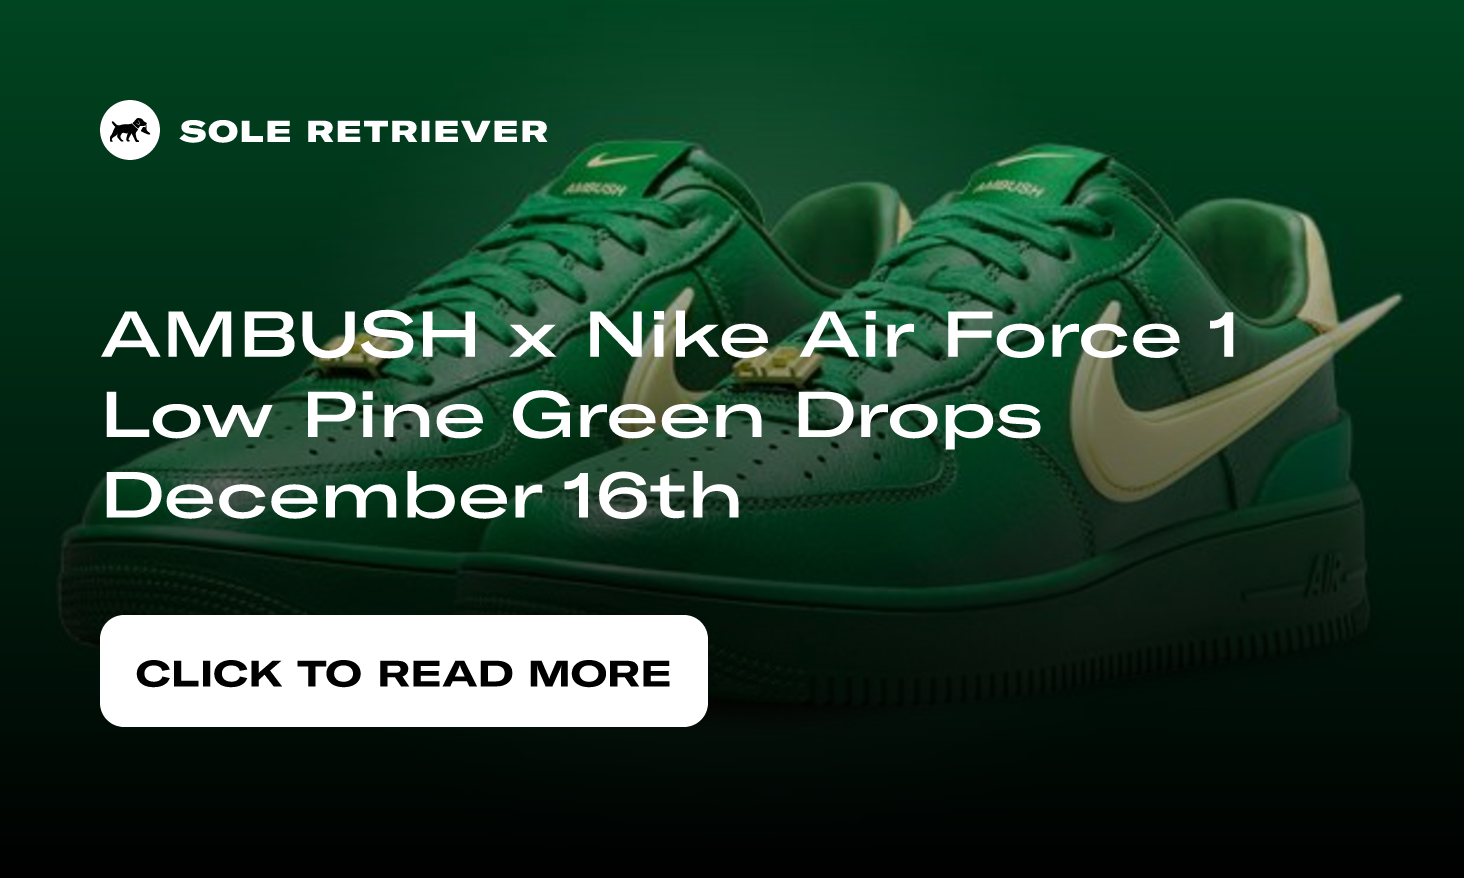 AMBUSH x Nike Air Force 1 Low Pine Green Drops December 16th